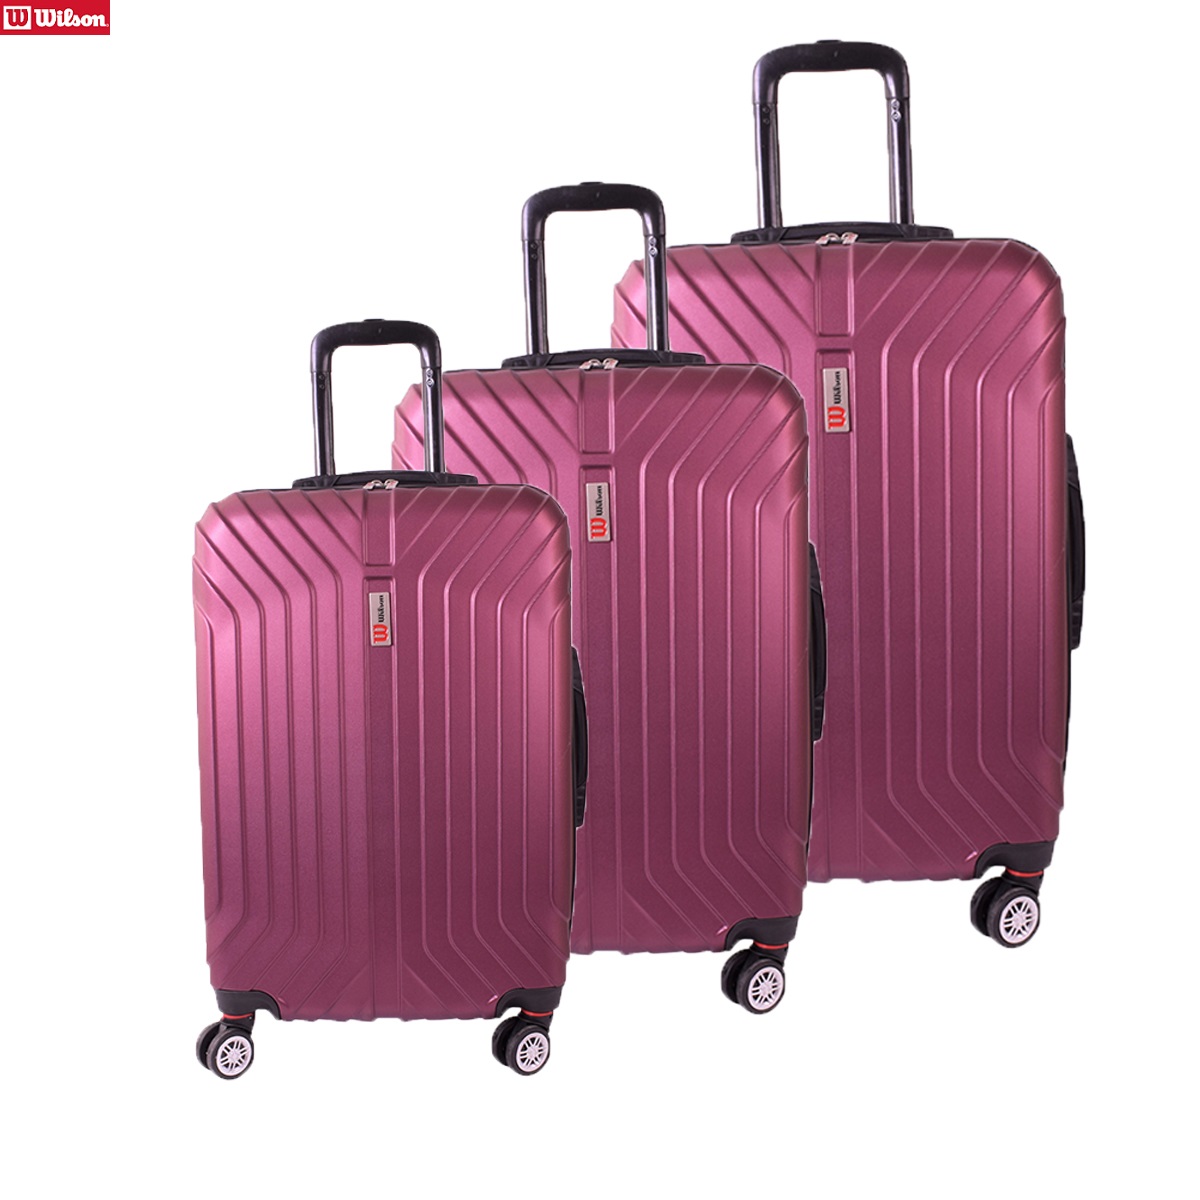 Wilson ABS Valiz Seti Bordo Renk 3 adet Bavul